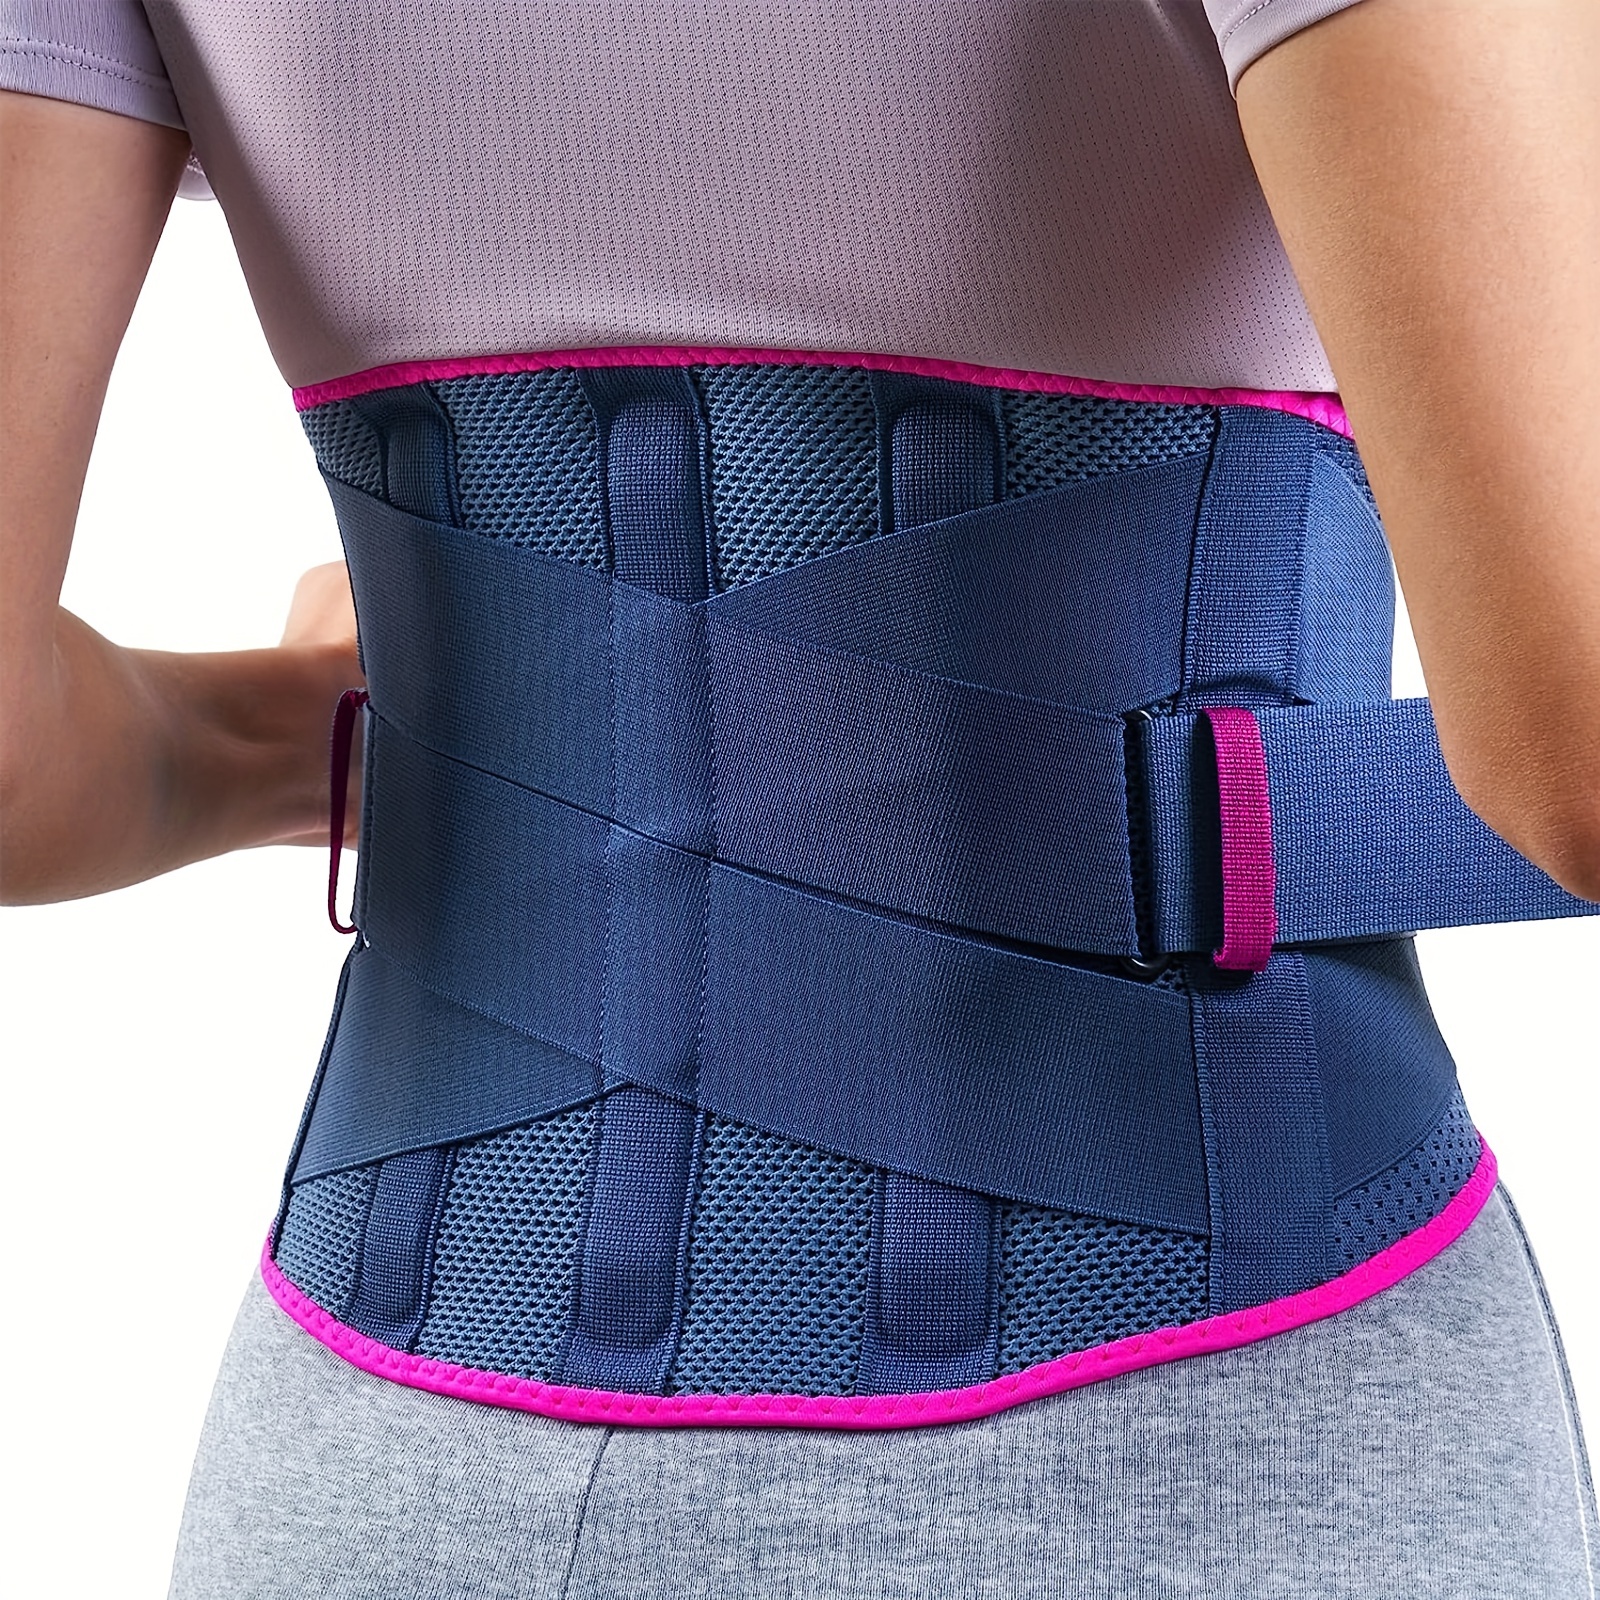 Self-heating tourmaline back brace for low back pain